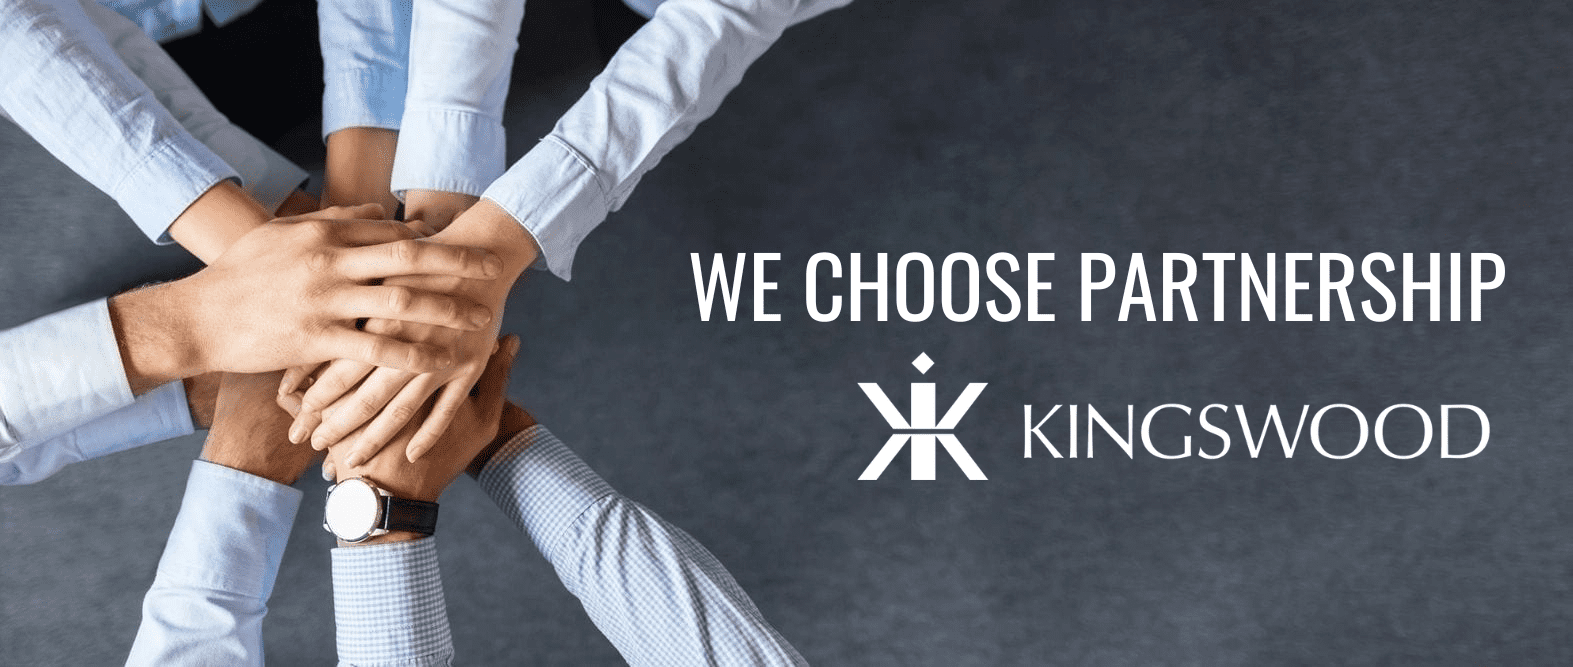 At Kingswood, we choose partnership (1)